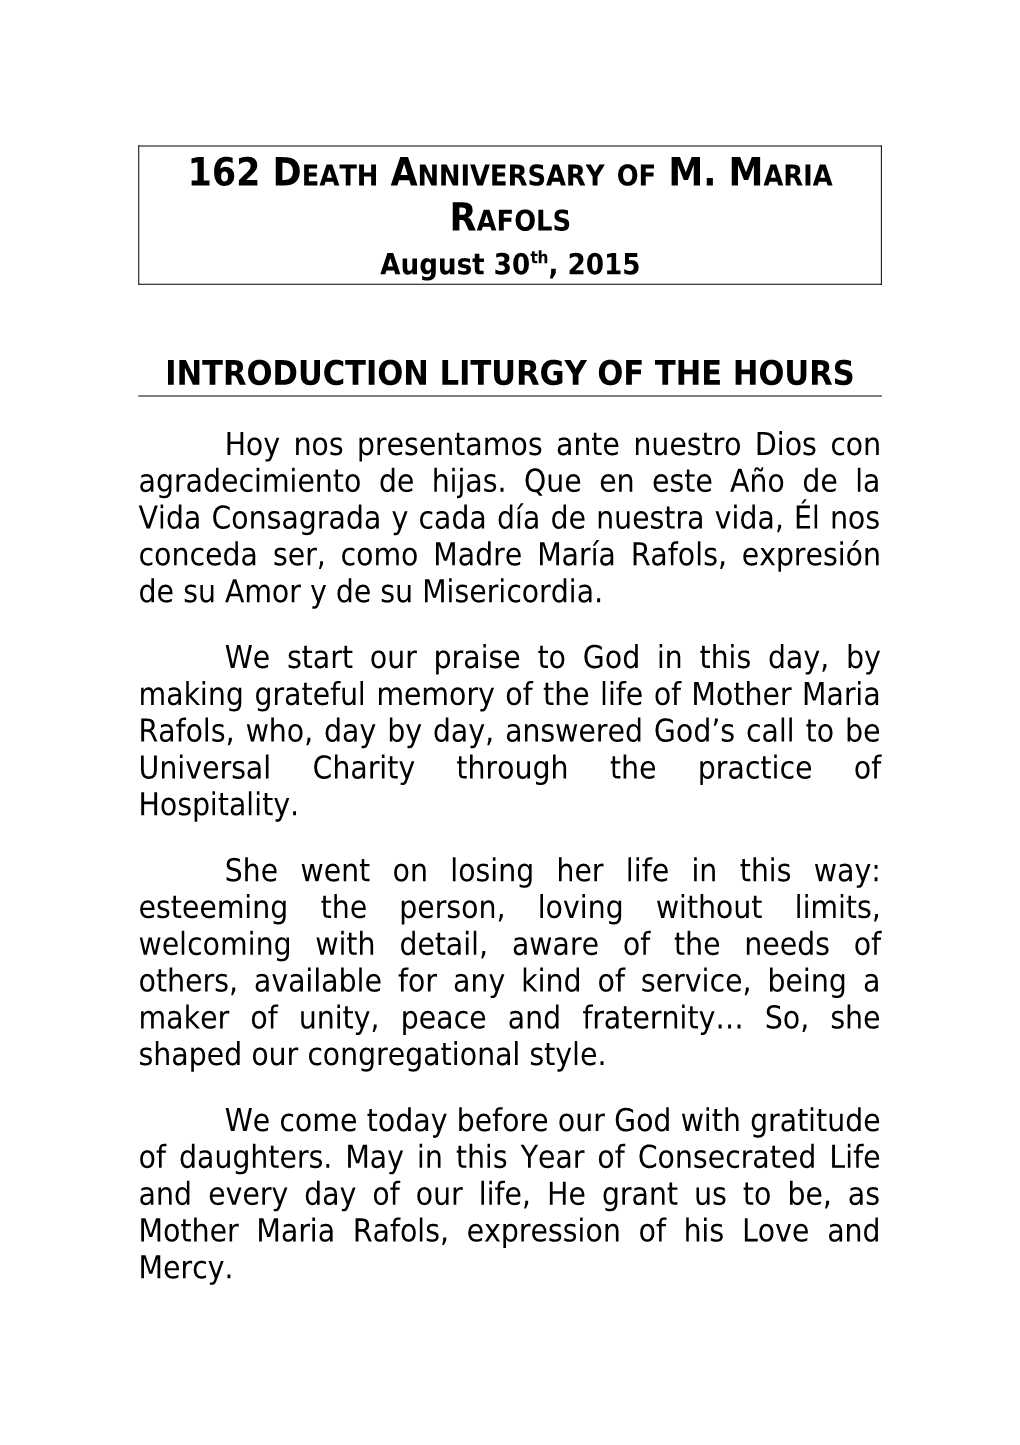 162 Death Anniversary of M. Maria Rafols